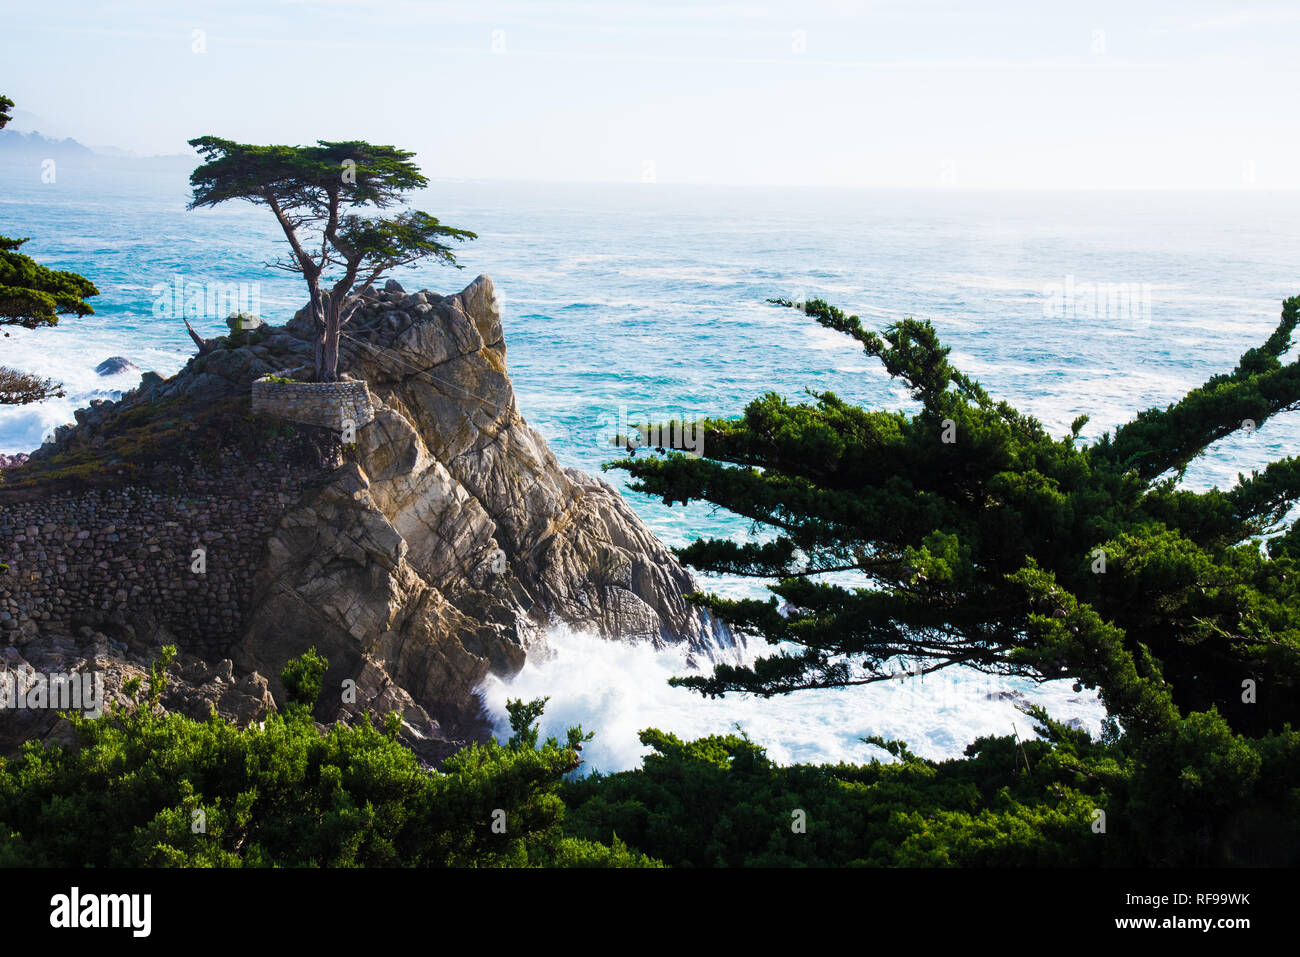 The Lone Cypress near Pebble Beach, CA. Stock Photo